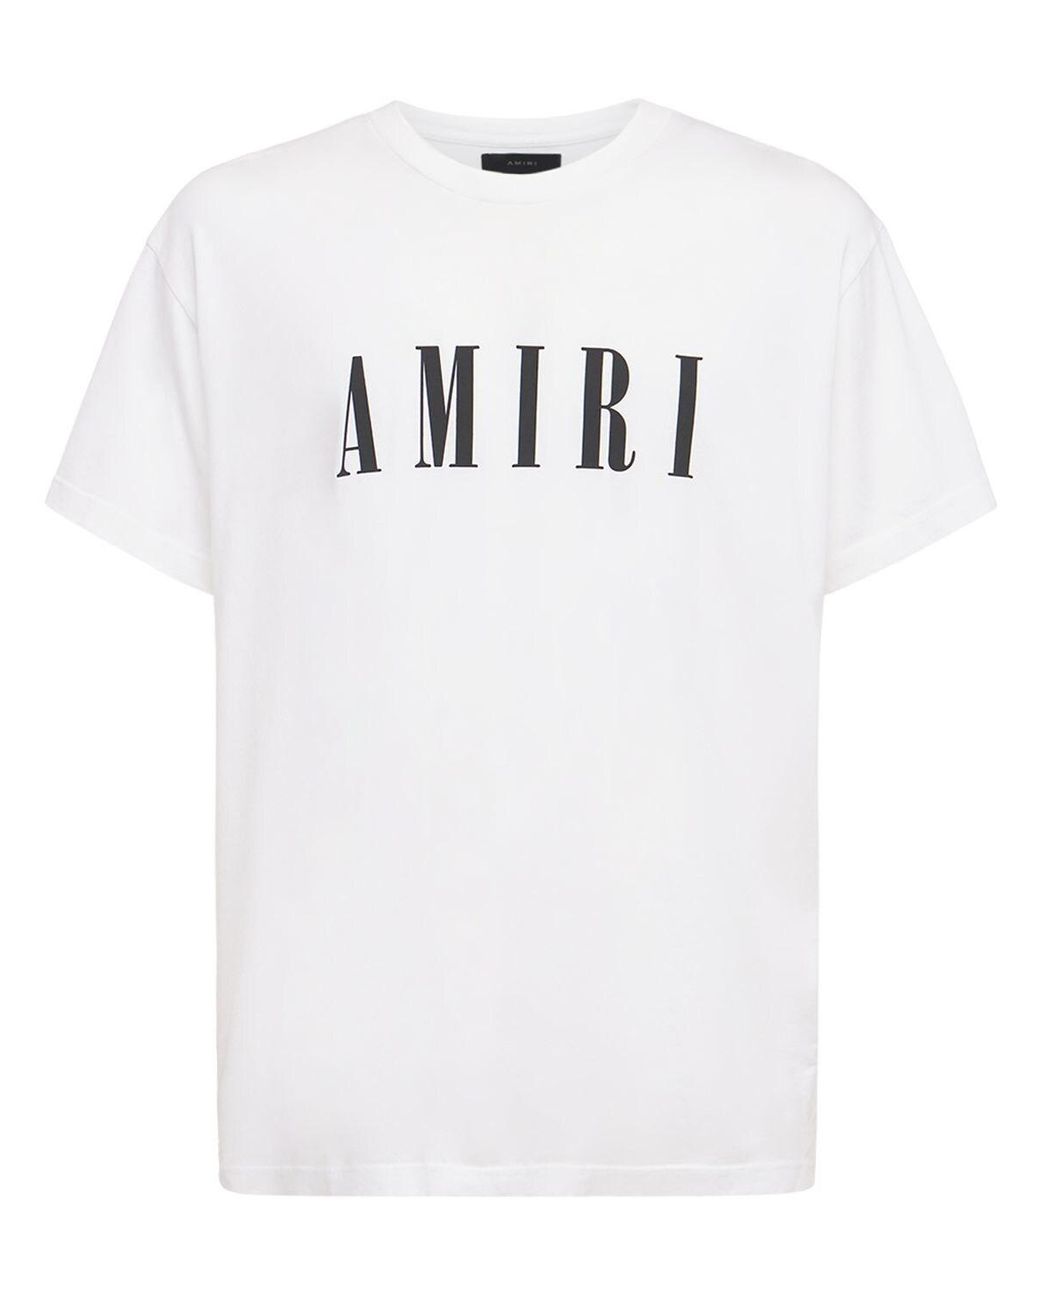 Amiri Core Logo Cotton Jersey T-shirt in White for Men - Lyst